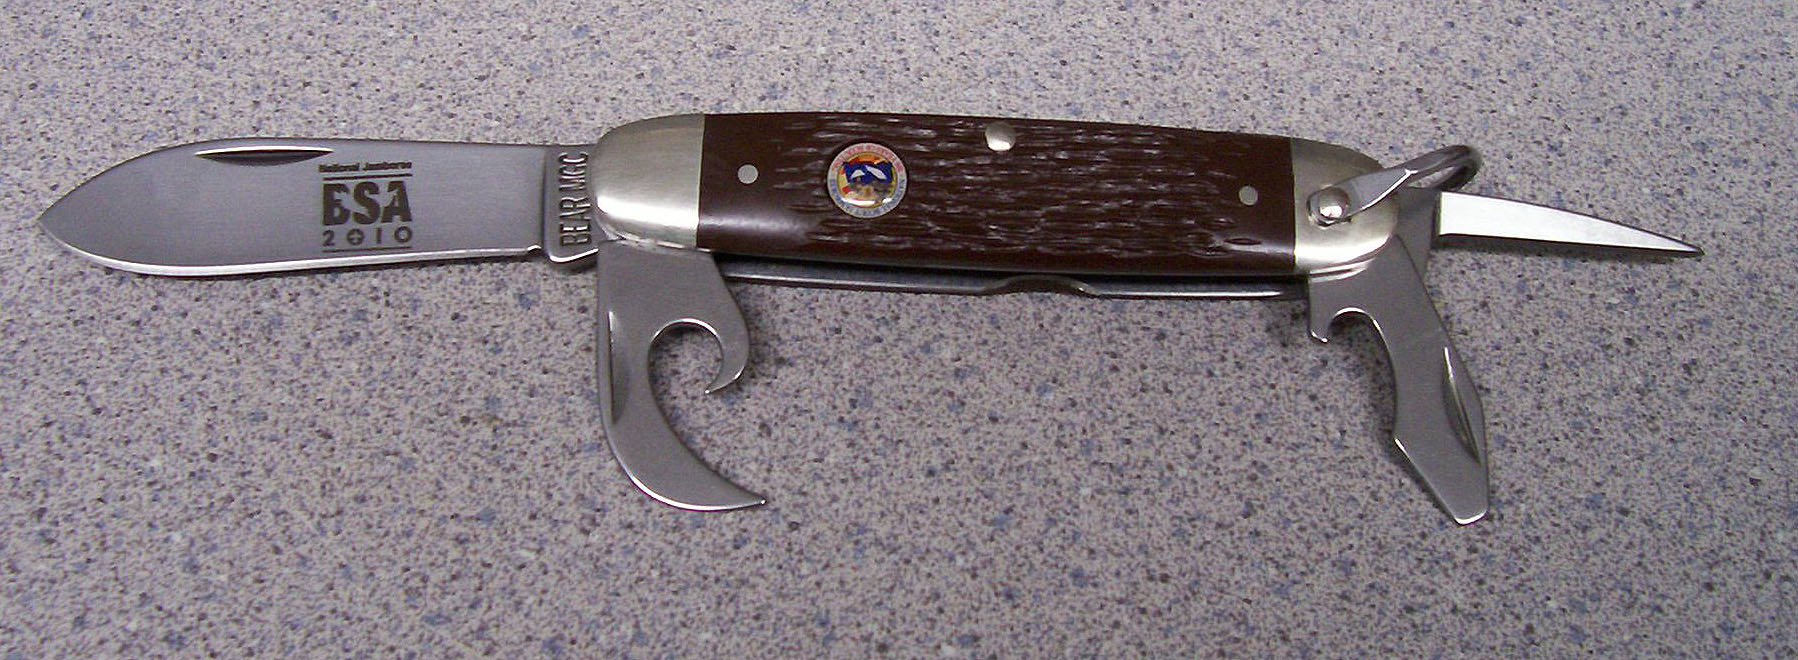 2010 National Jamboree BEAR MGC knife (open)